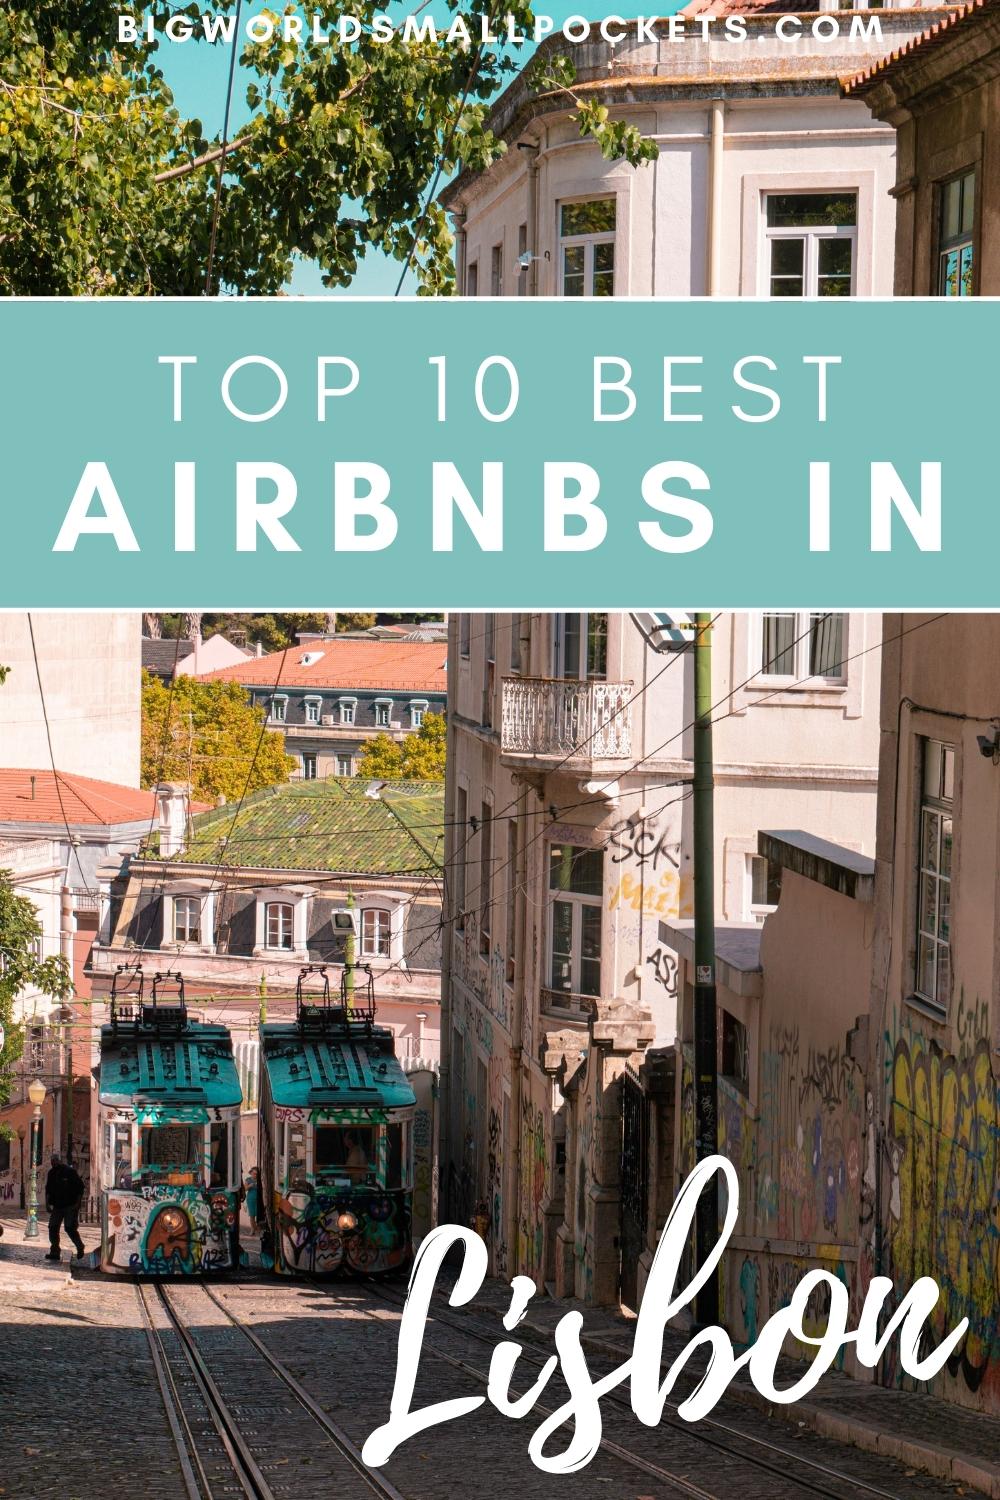 10 Best Airbnbs in Lisbon